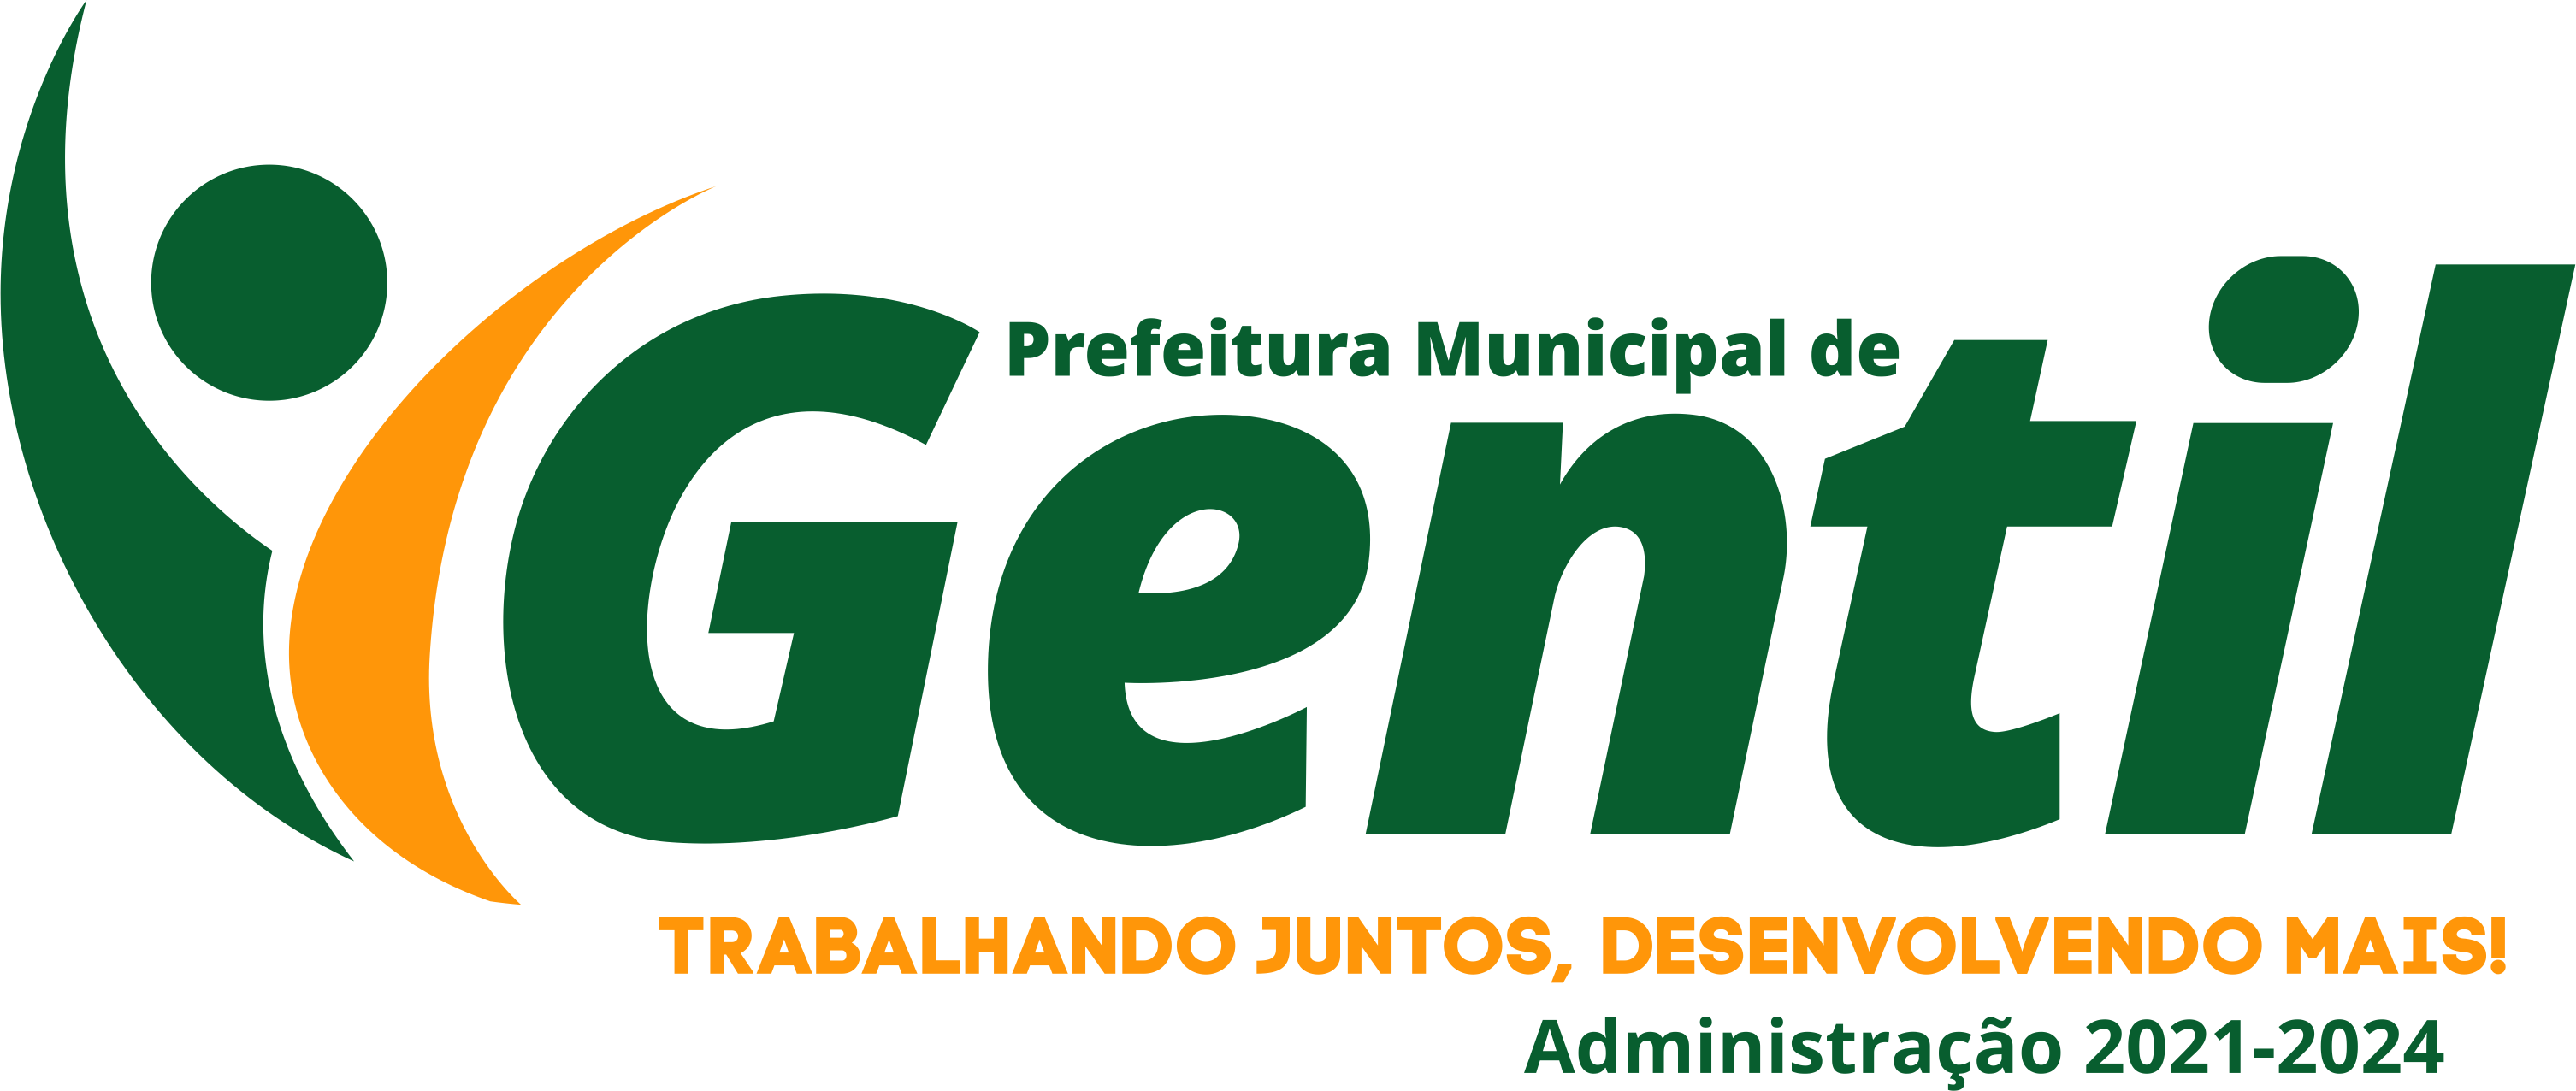 Prefeitura Municipal <br> de Gentil